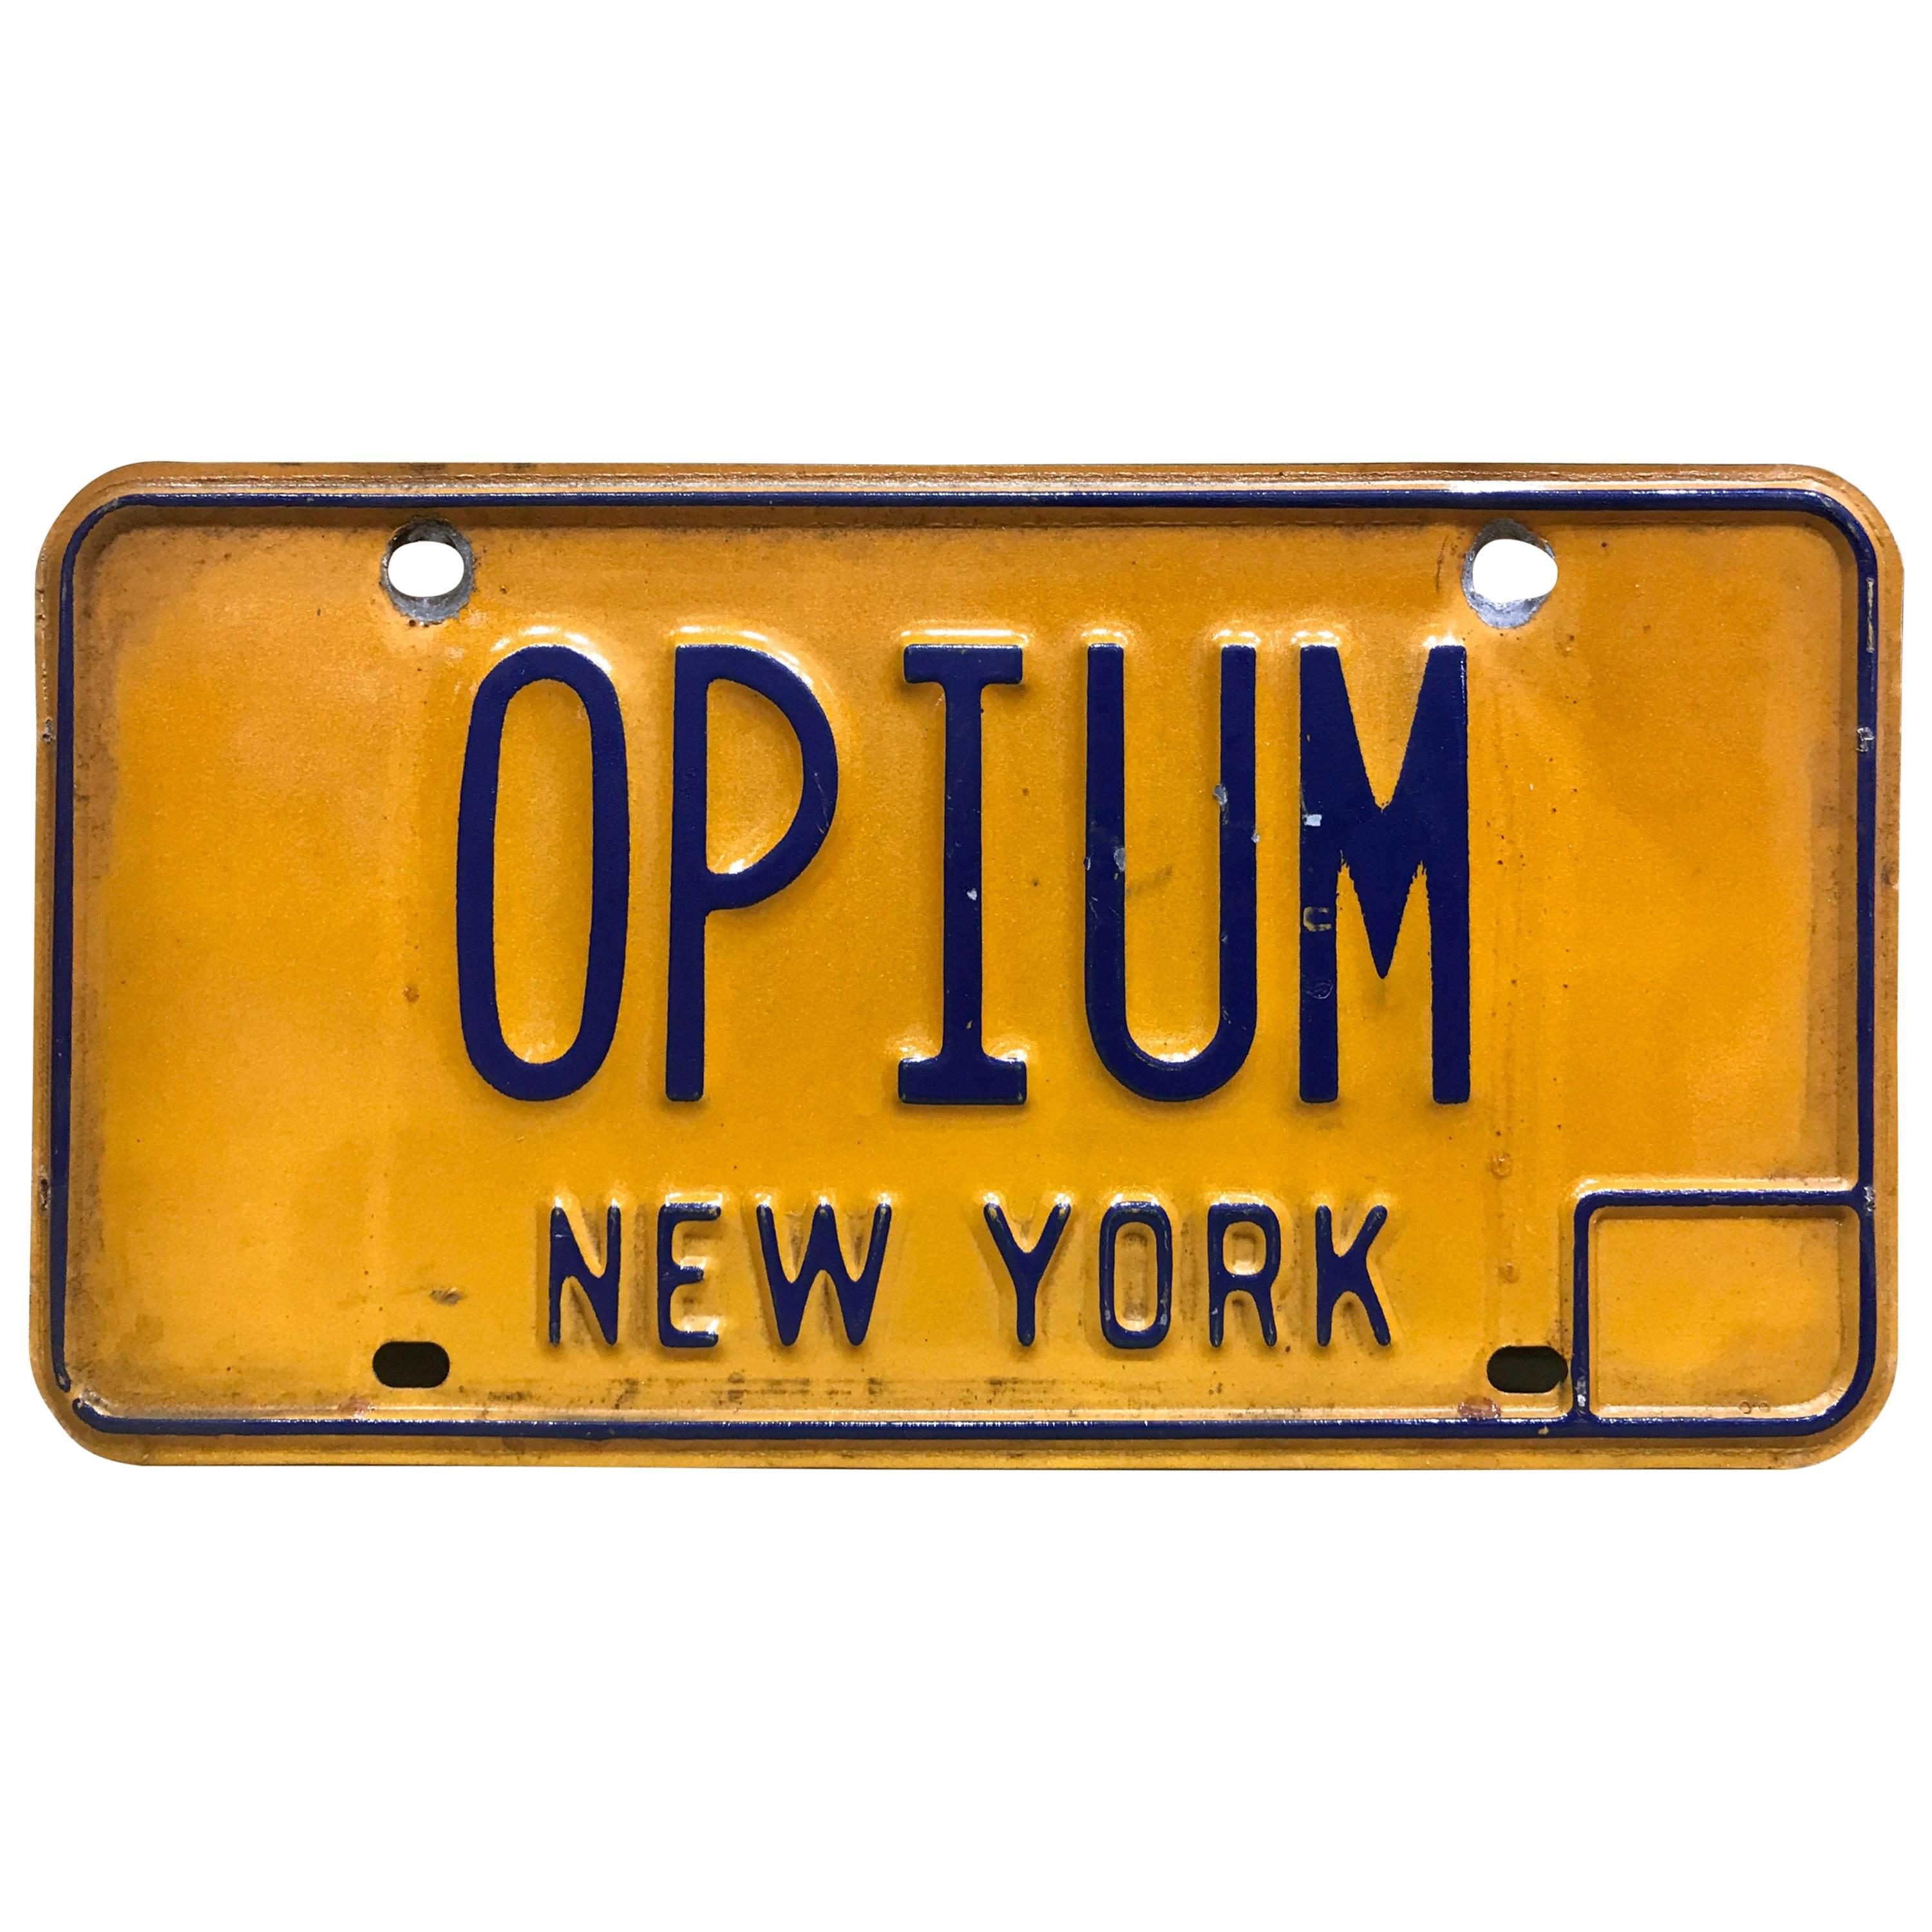 New York Vanity License Plate OPIUM For Sale